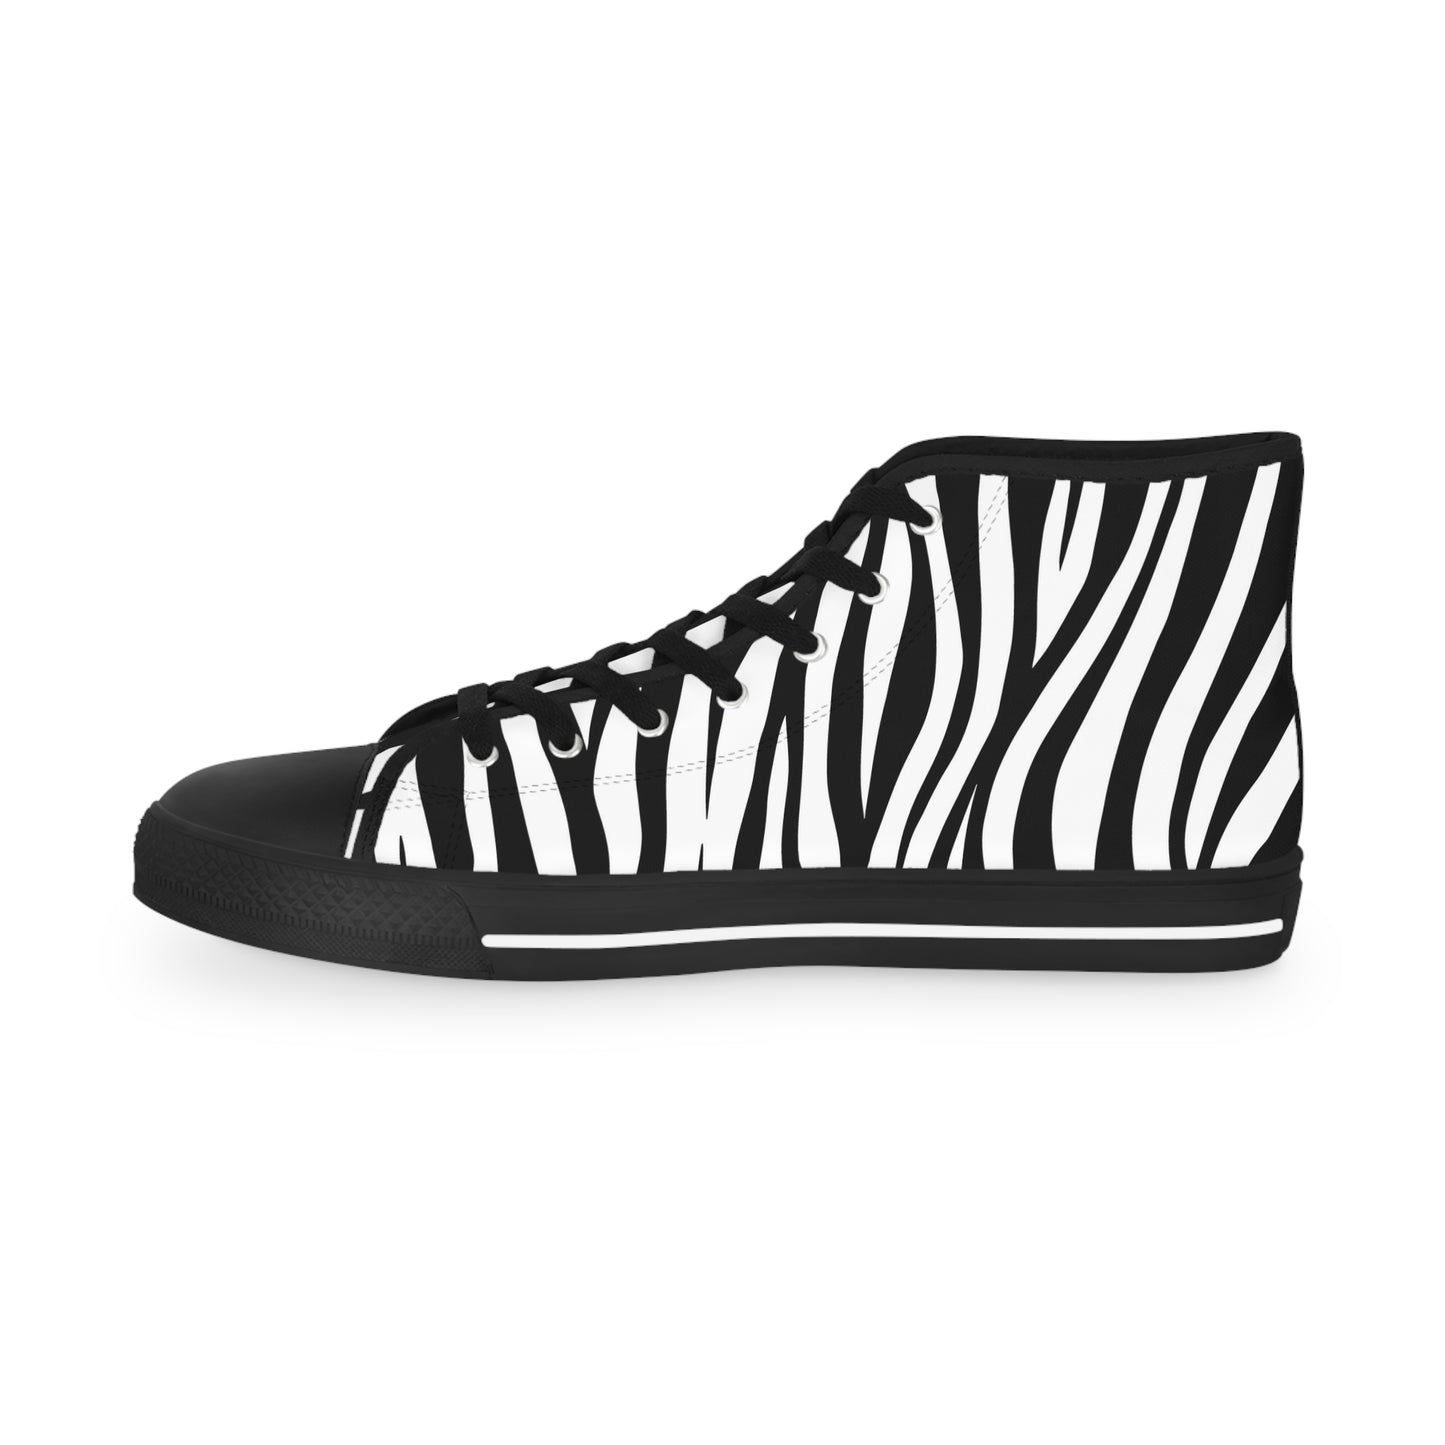 Zebra Pattern Double Design High Top Sneakers